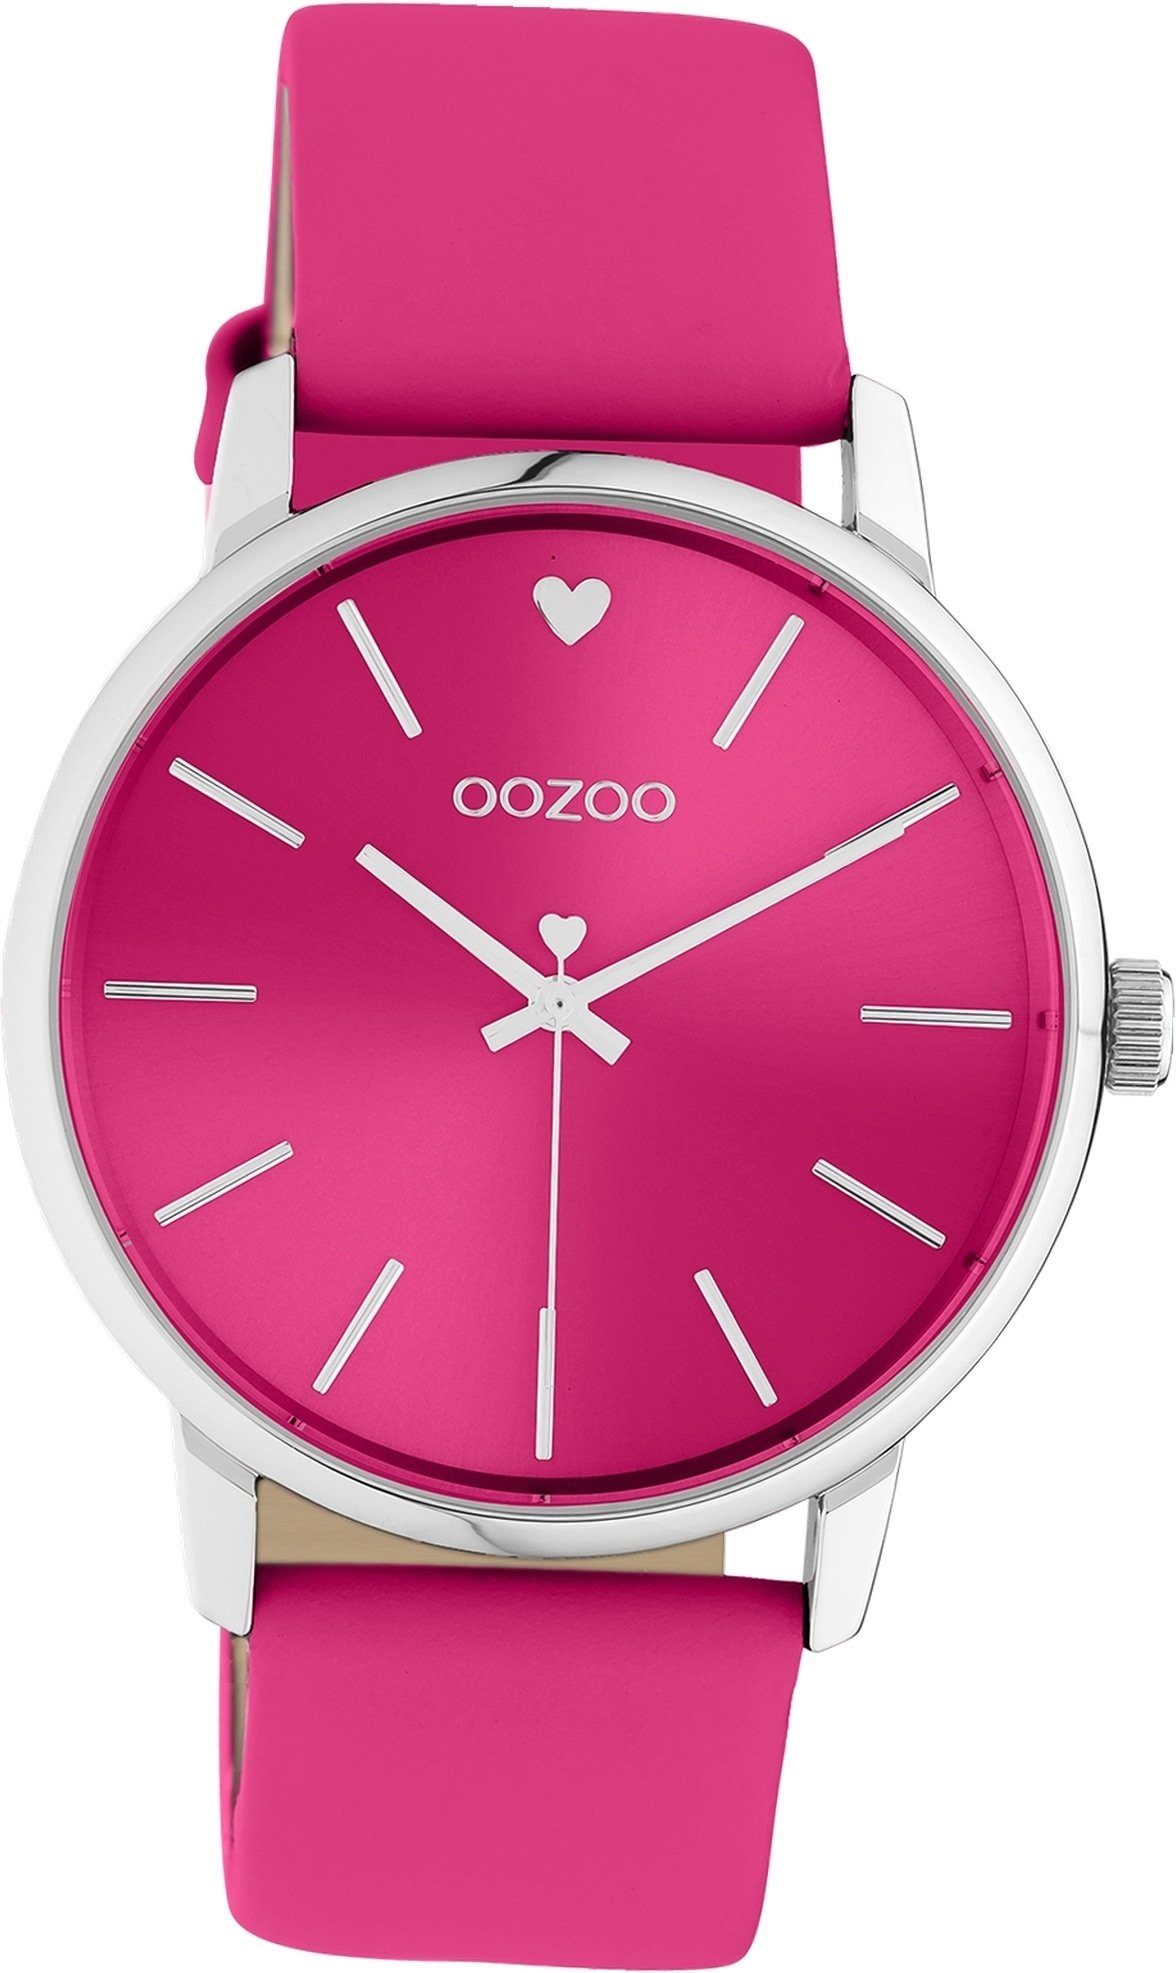 OOZOO Quarzuhr (ca. Gehäuse, groß Damenuhr Timepieces, Armbanduhr Damen 40mm) Lederarmband Oozoo pink, rundes